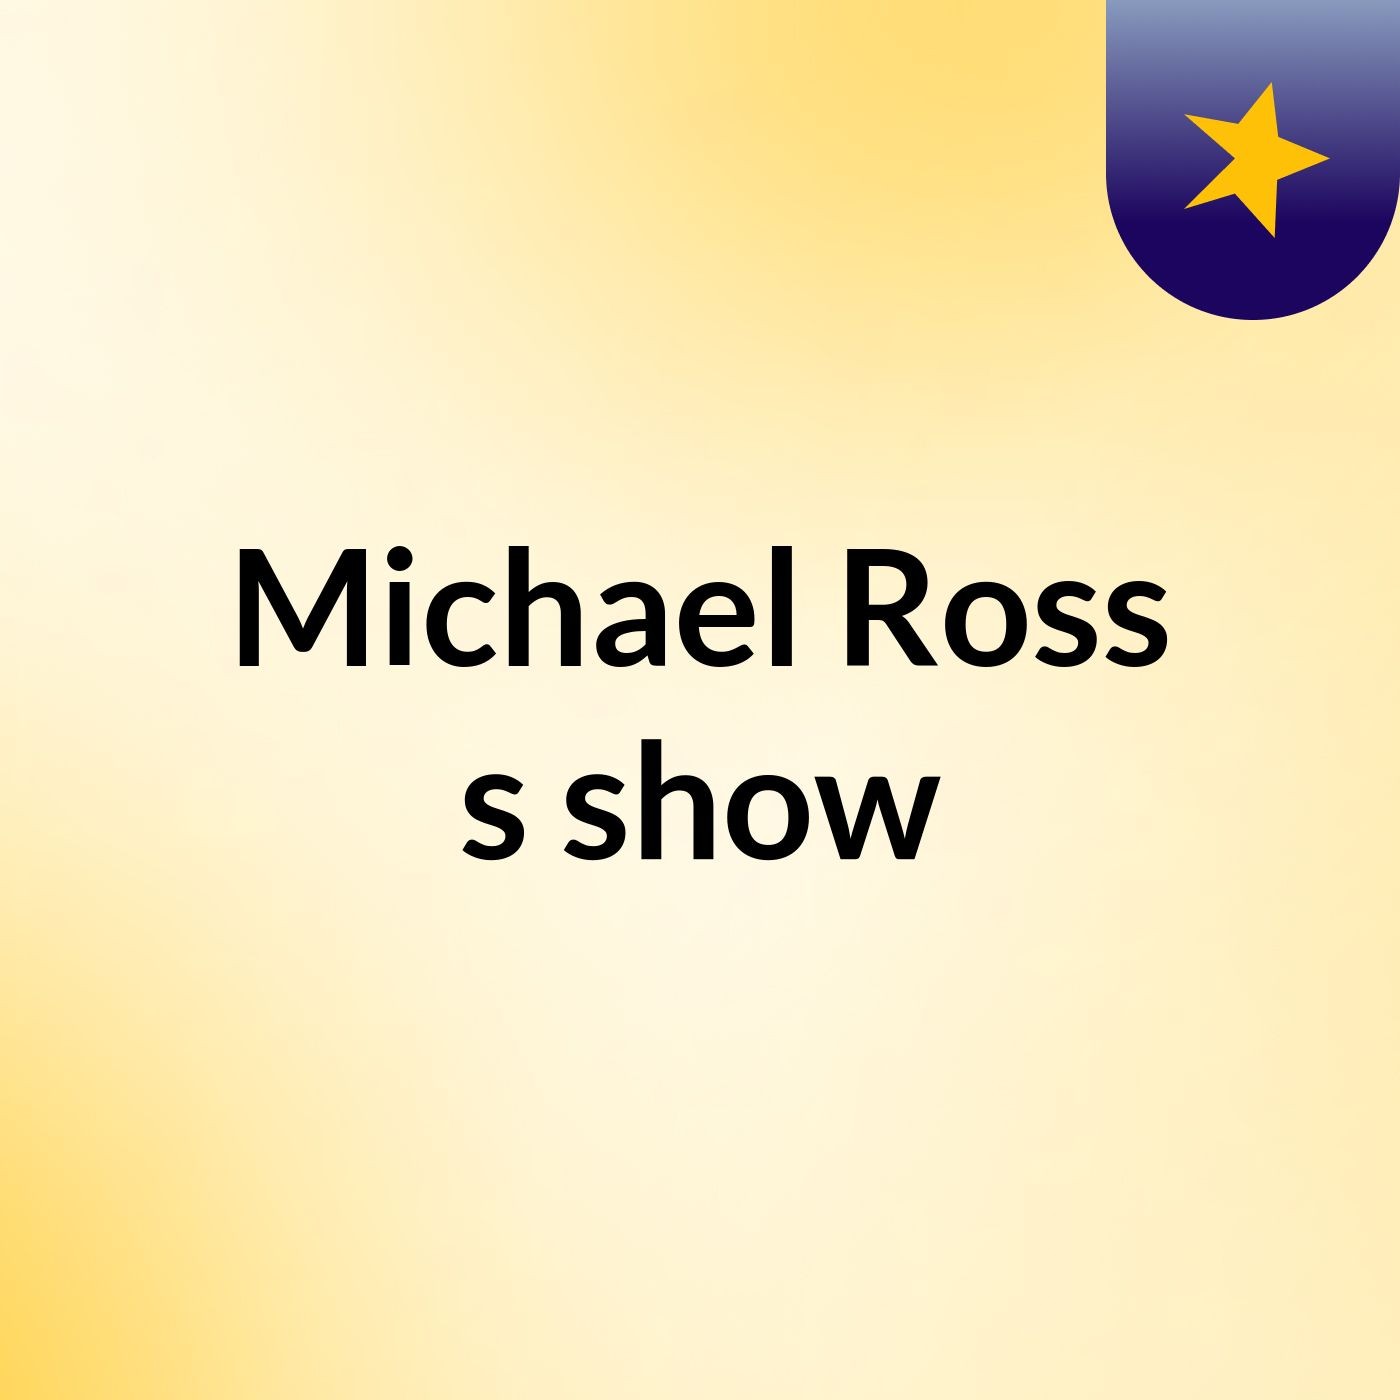 Michael Ross's show